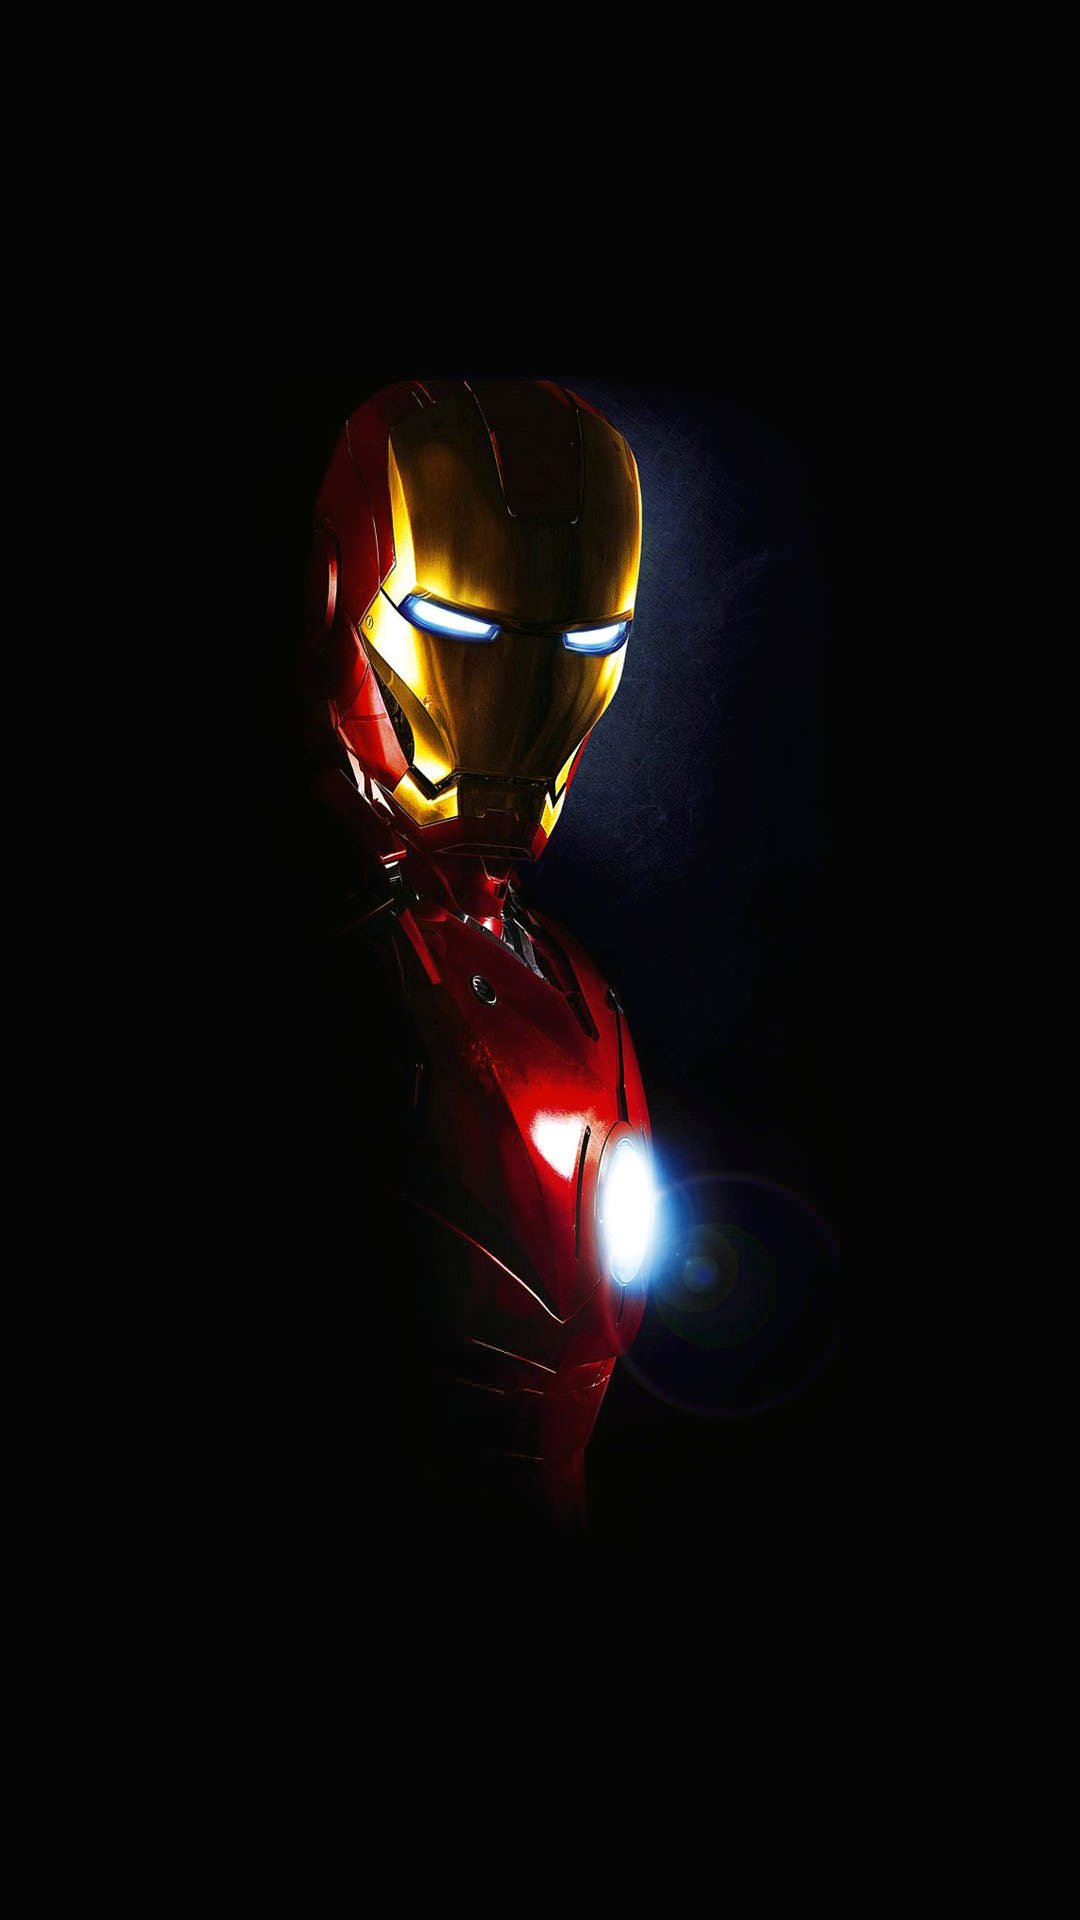 iron man wallpaper iphone,helmet,light,red,automotive lighting,lighting